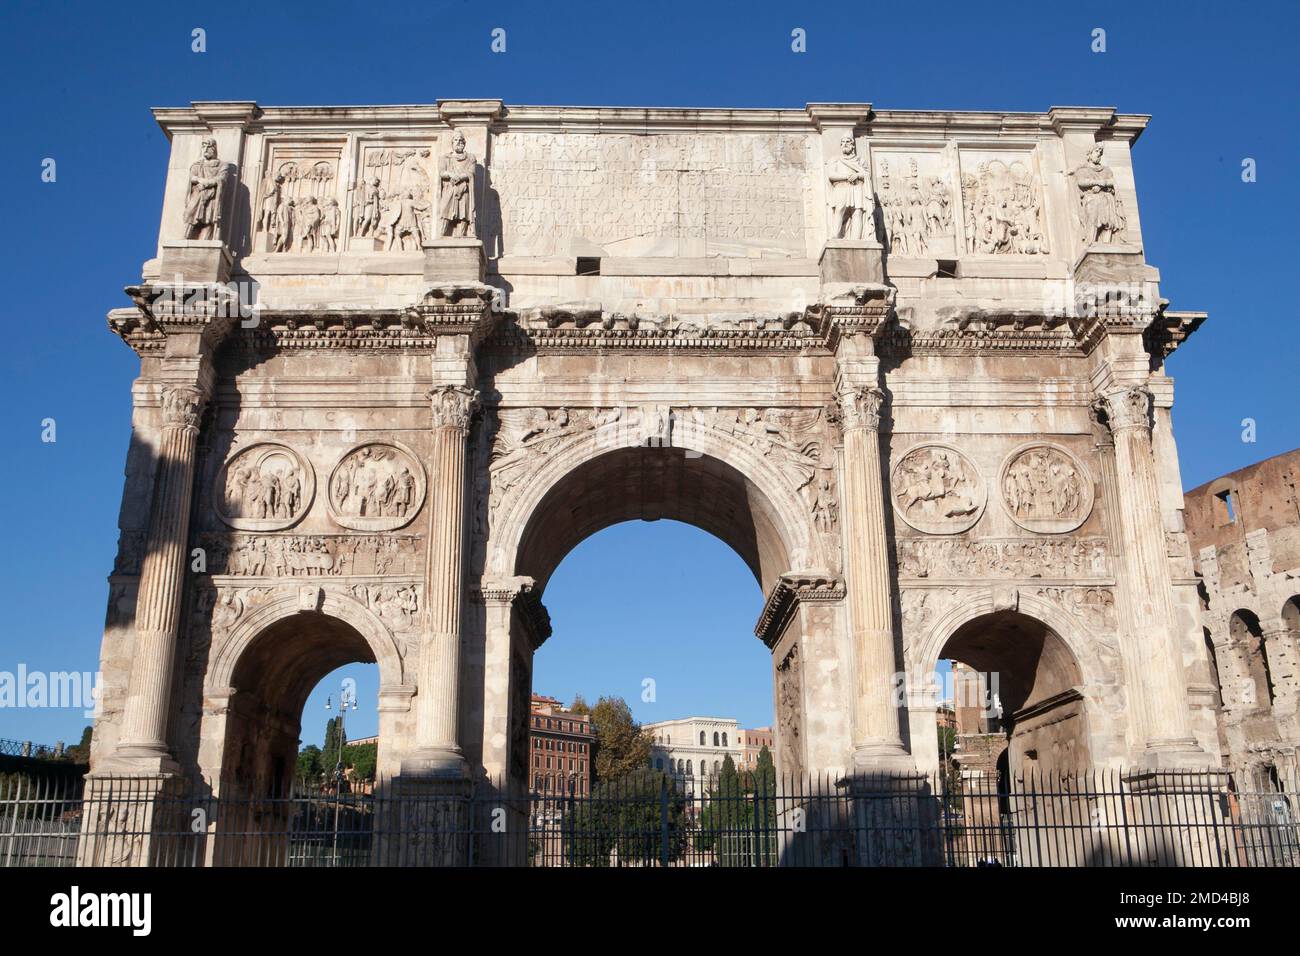 Arch of Septimius Severus in Rome Stock Photo - Alamy